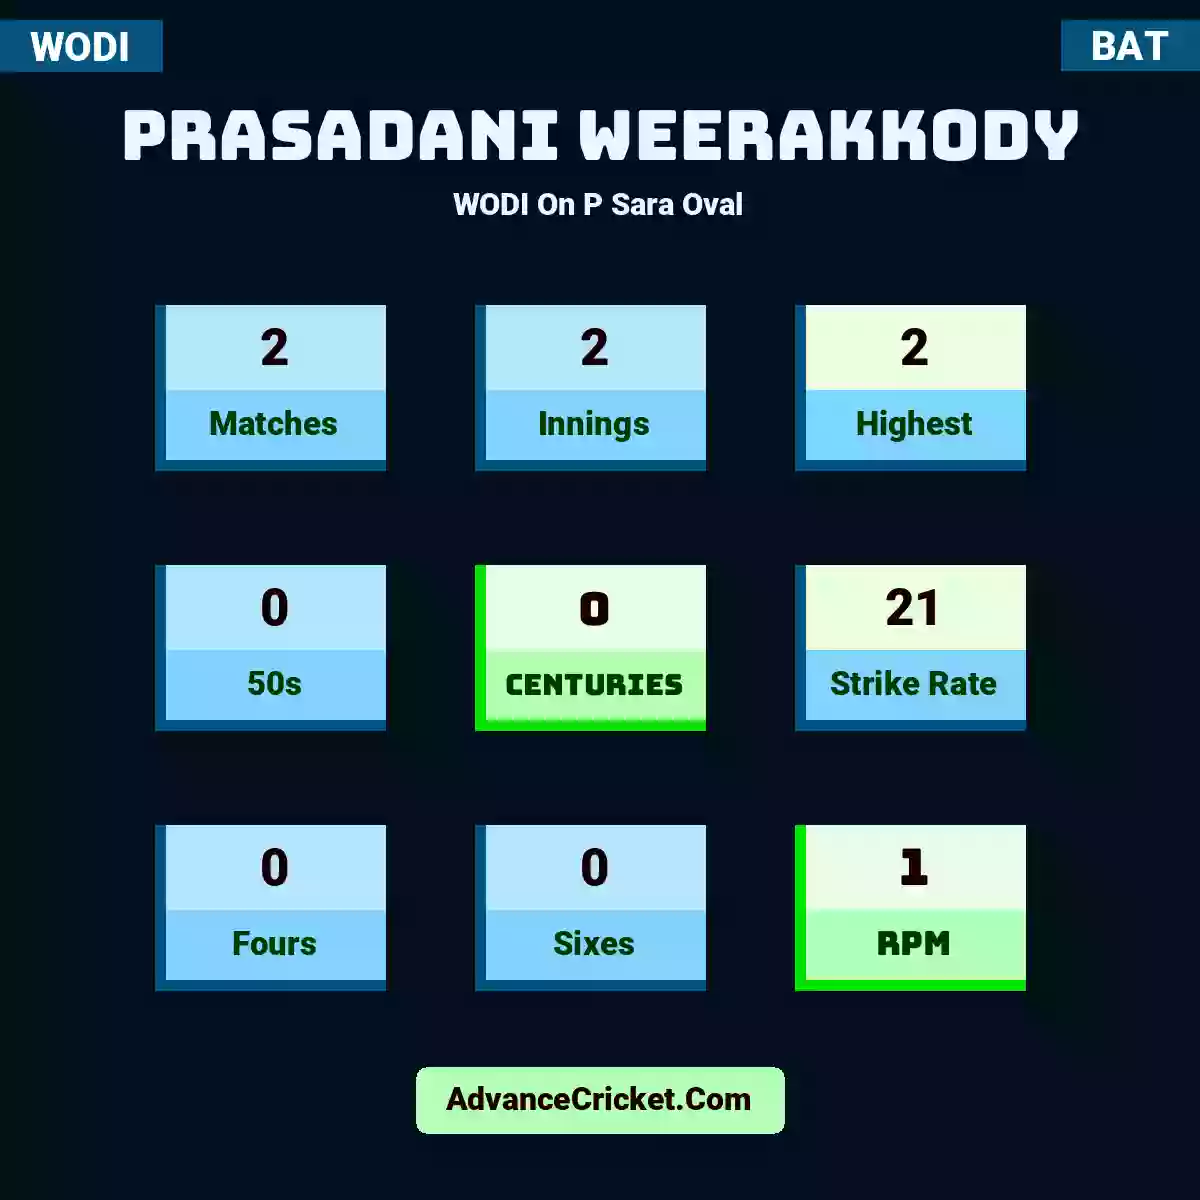 Prasadani Weerakkody WODI  On P Sara Oval, Prasadani Weerakkody played 2 matches, scored 2 runs as highest, 0 half-centuries, and 0 centuries, with a strike rate of 21. P.Weerakkody hit 0 fours and 0 sixes, with an RPM of 1.